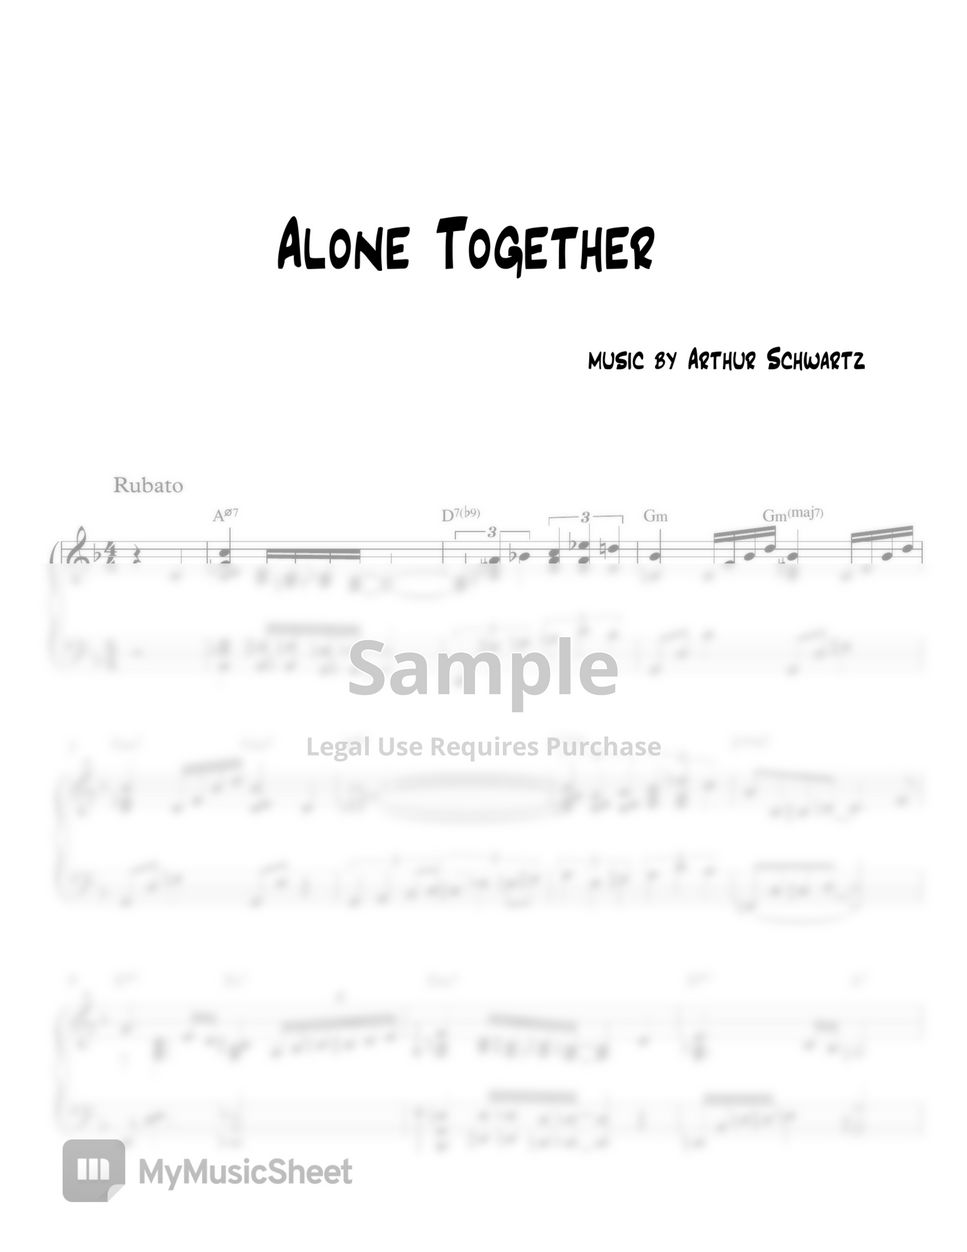 Arthur Schwartz - Alone Together by MIWHA